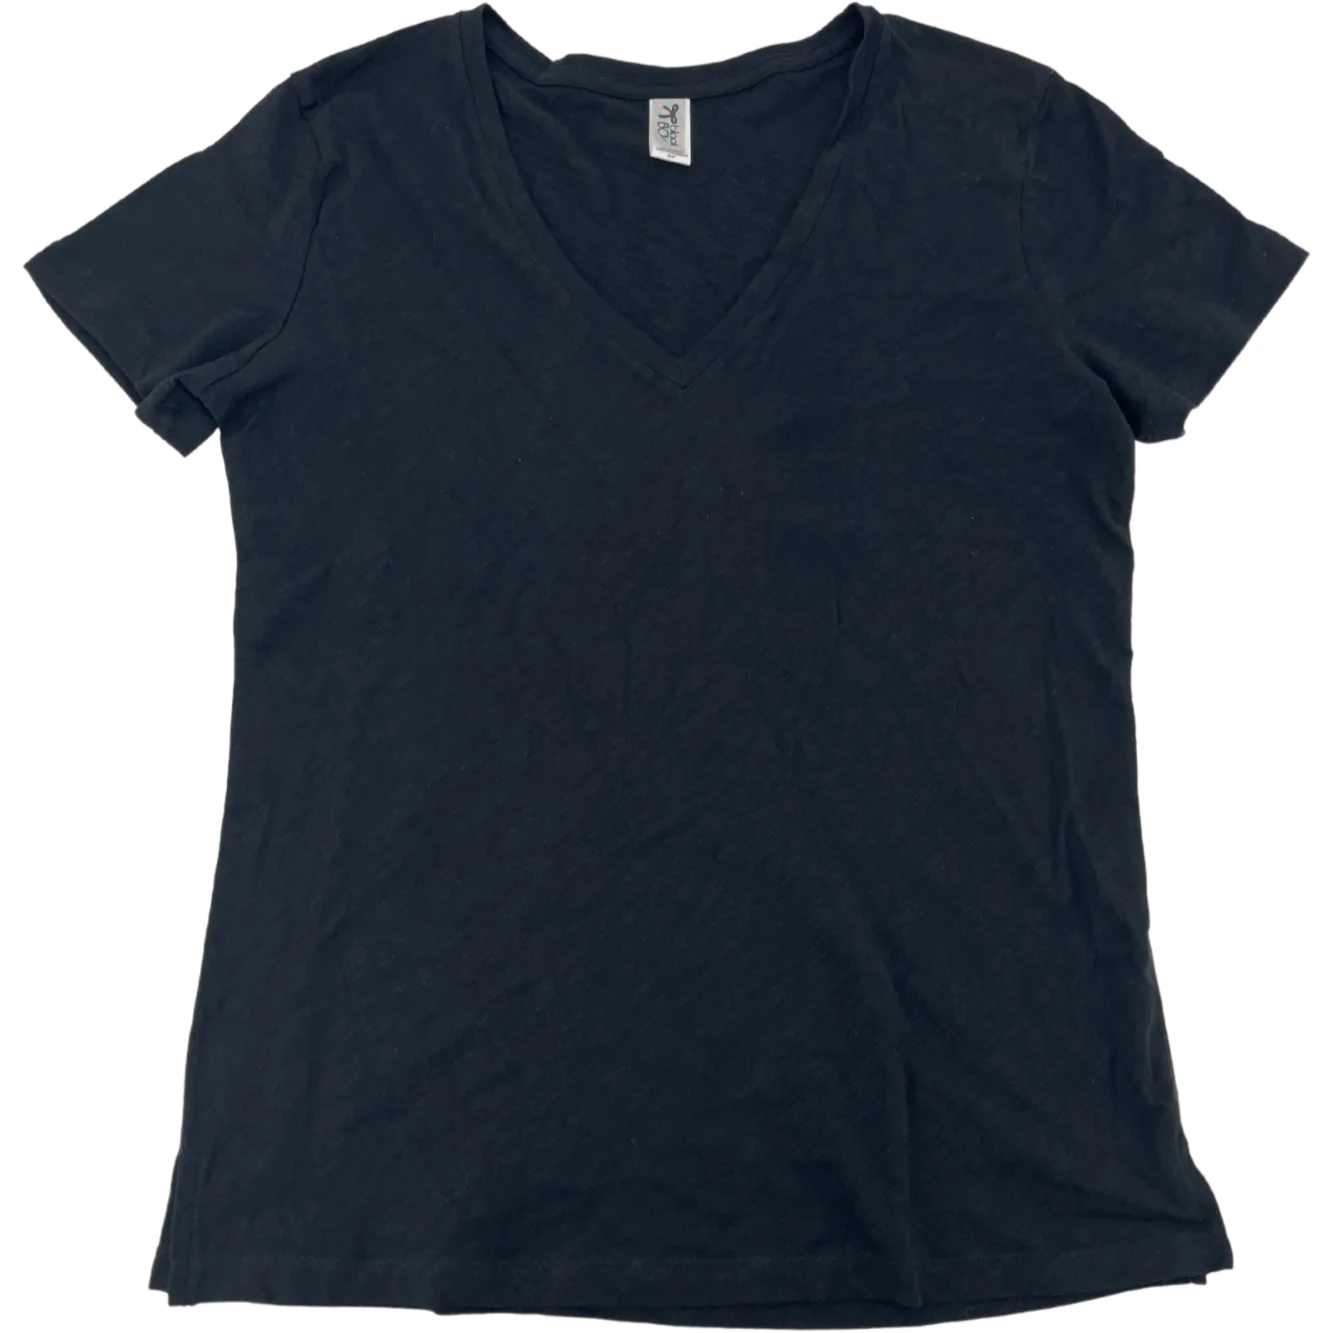 Black Bow Women's T-Shirt / Black / Size Small